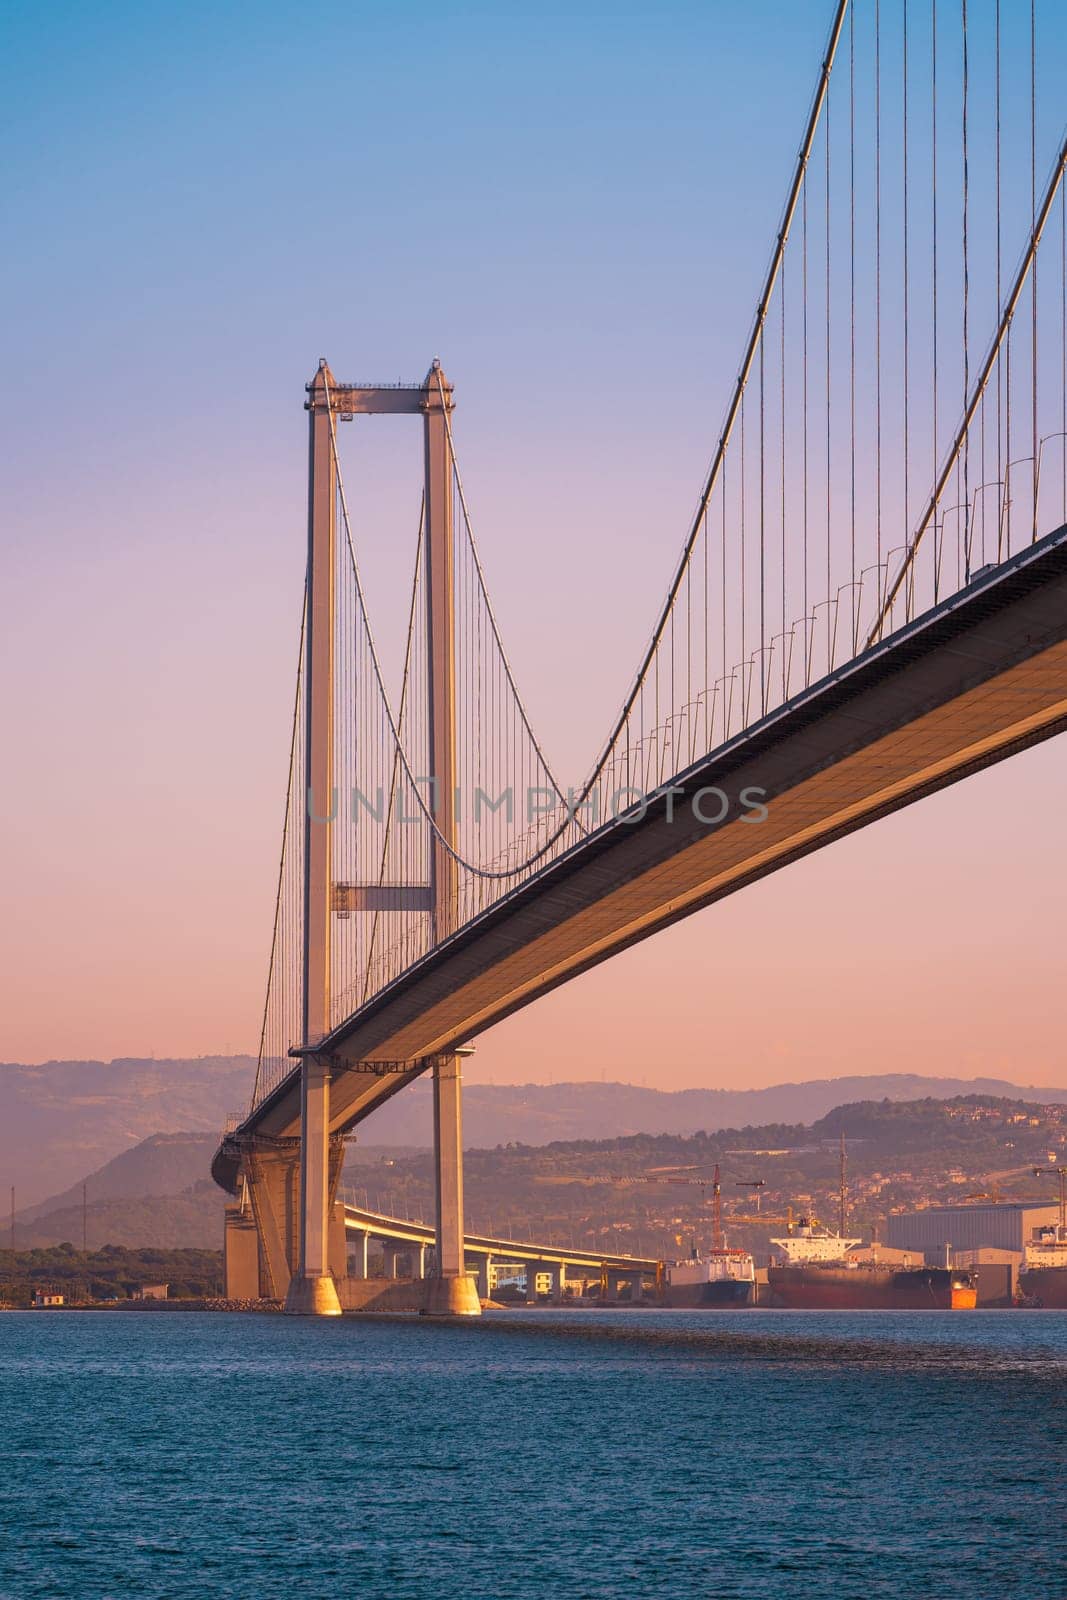 Osmangazi Bridge (Izmit Bay Bridge) located in Izmit, Kocaeli, Turkey. Suspension bridge